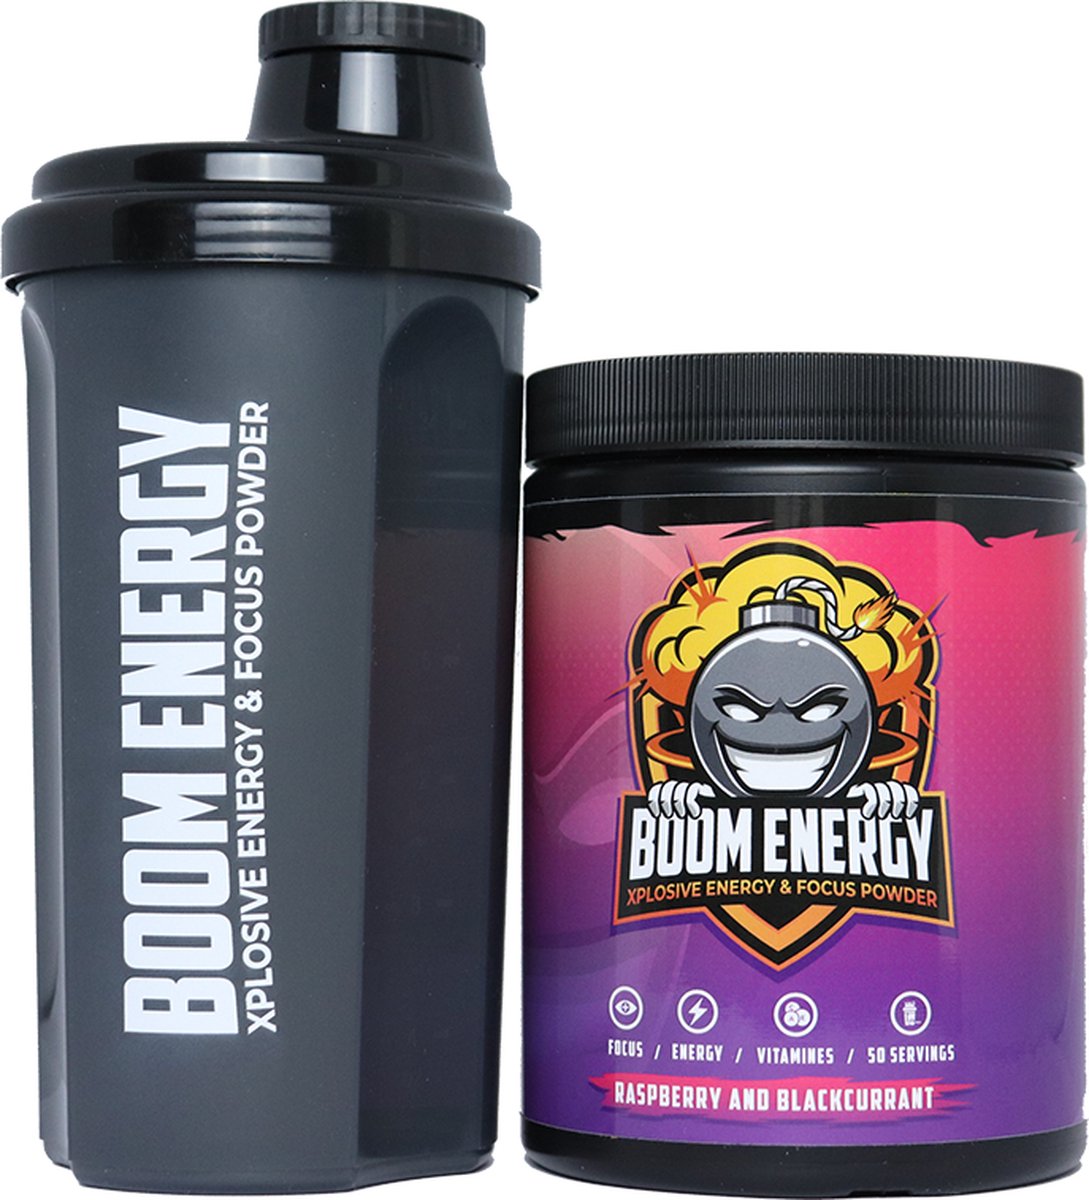 Boom Energy Framboos & Zwarte bes met shaker - Suikervrije Gaming Energy drink - Pre workout - 50 servings